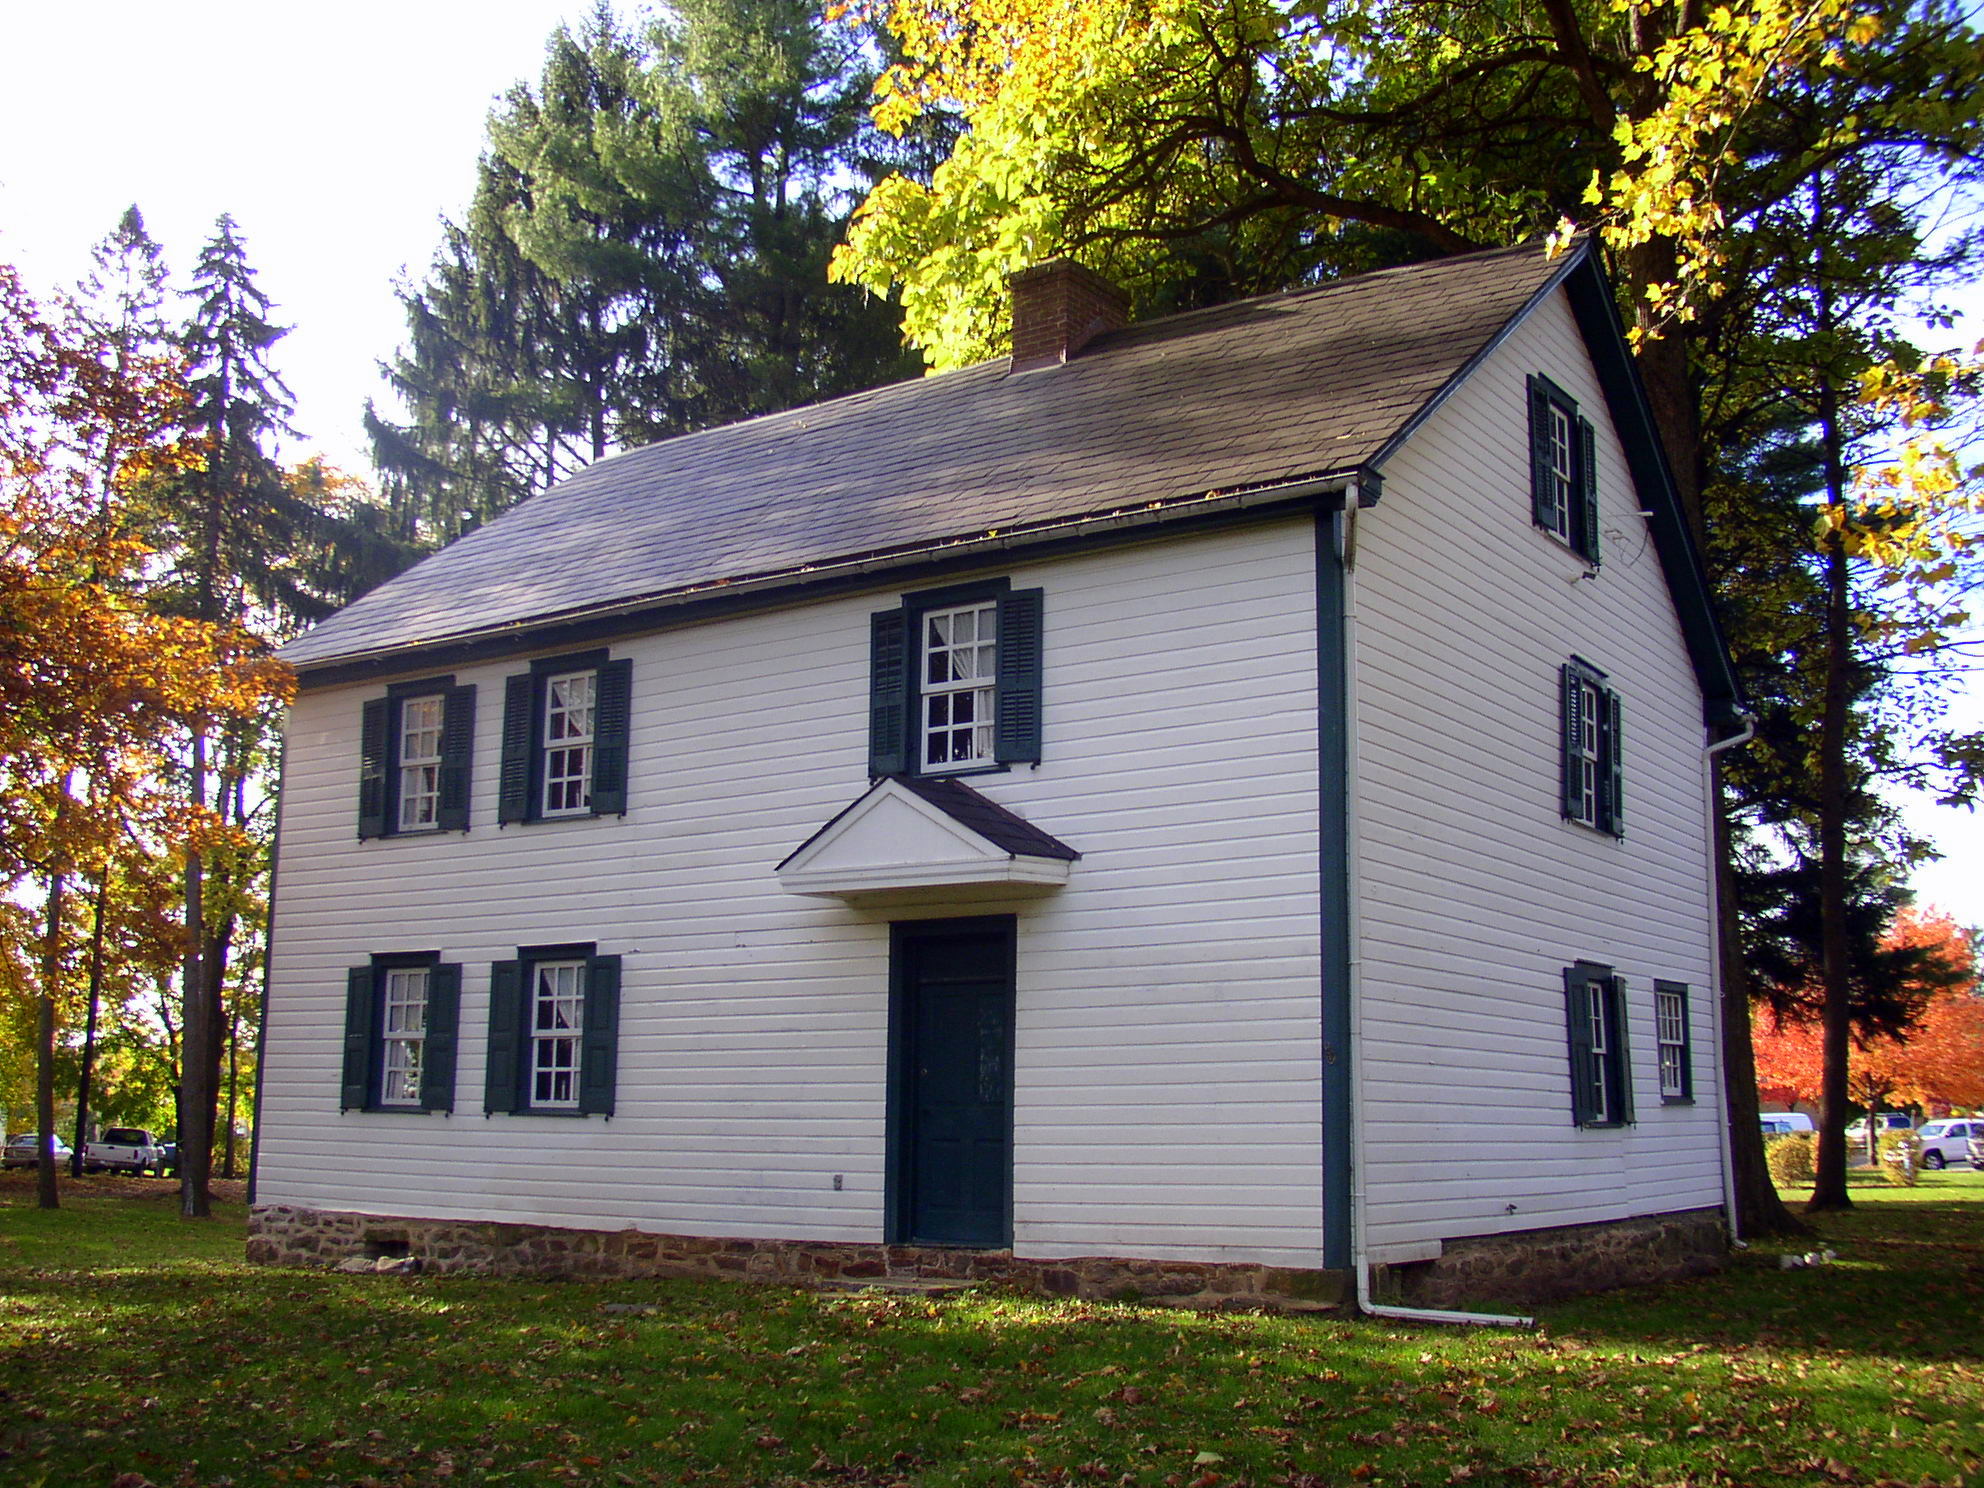 The Knauss Homestead, Emmaus, Pennsylvania (1777)